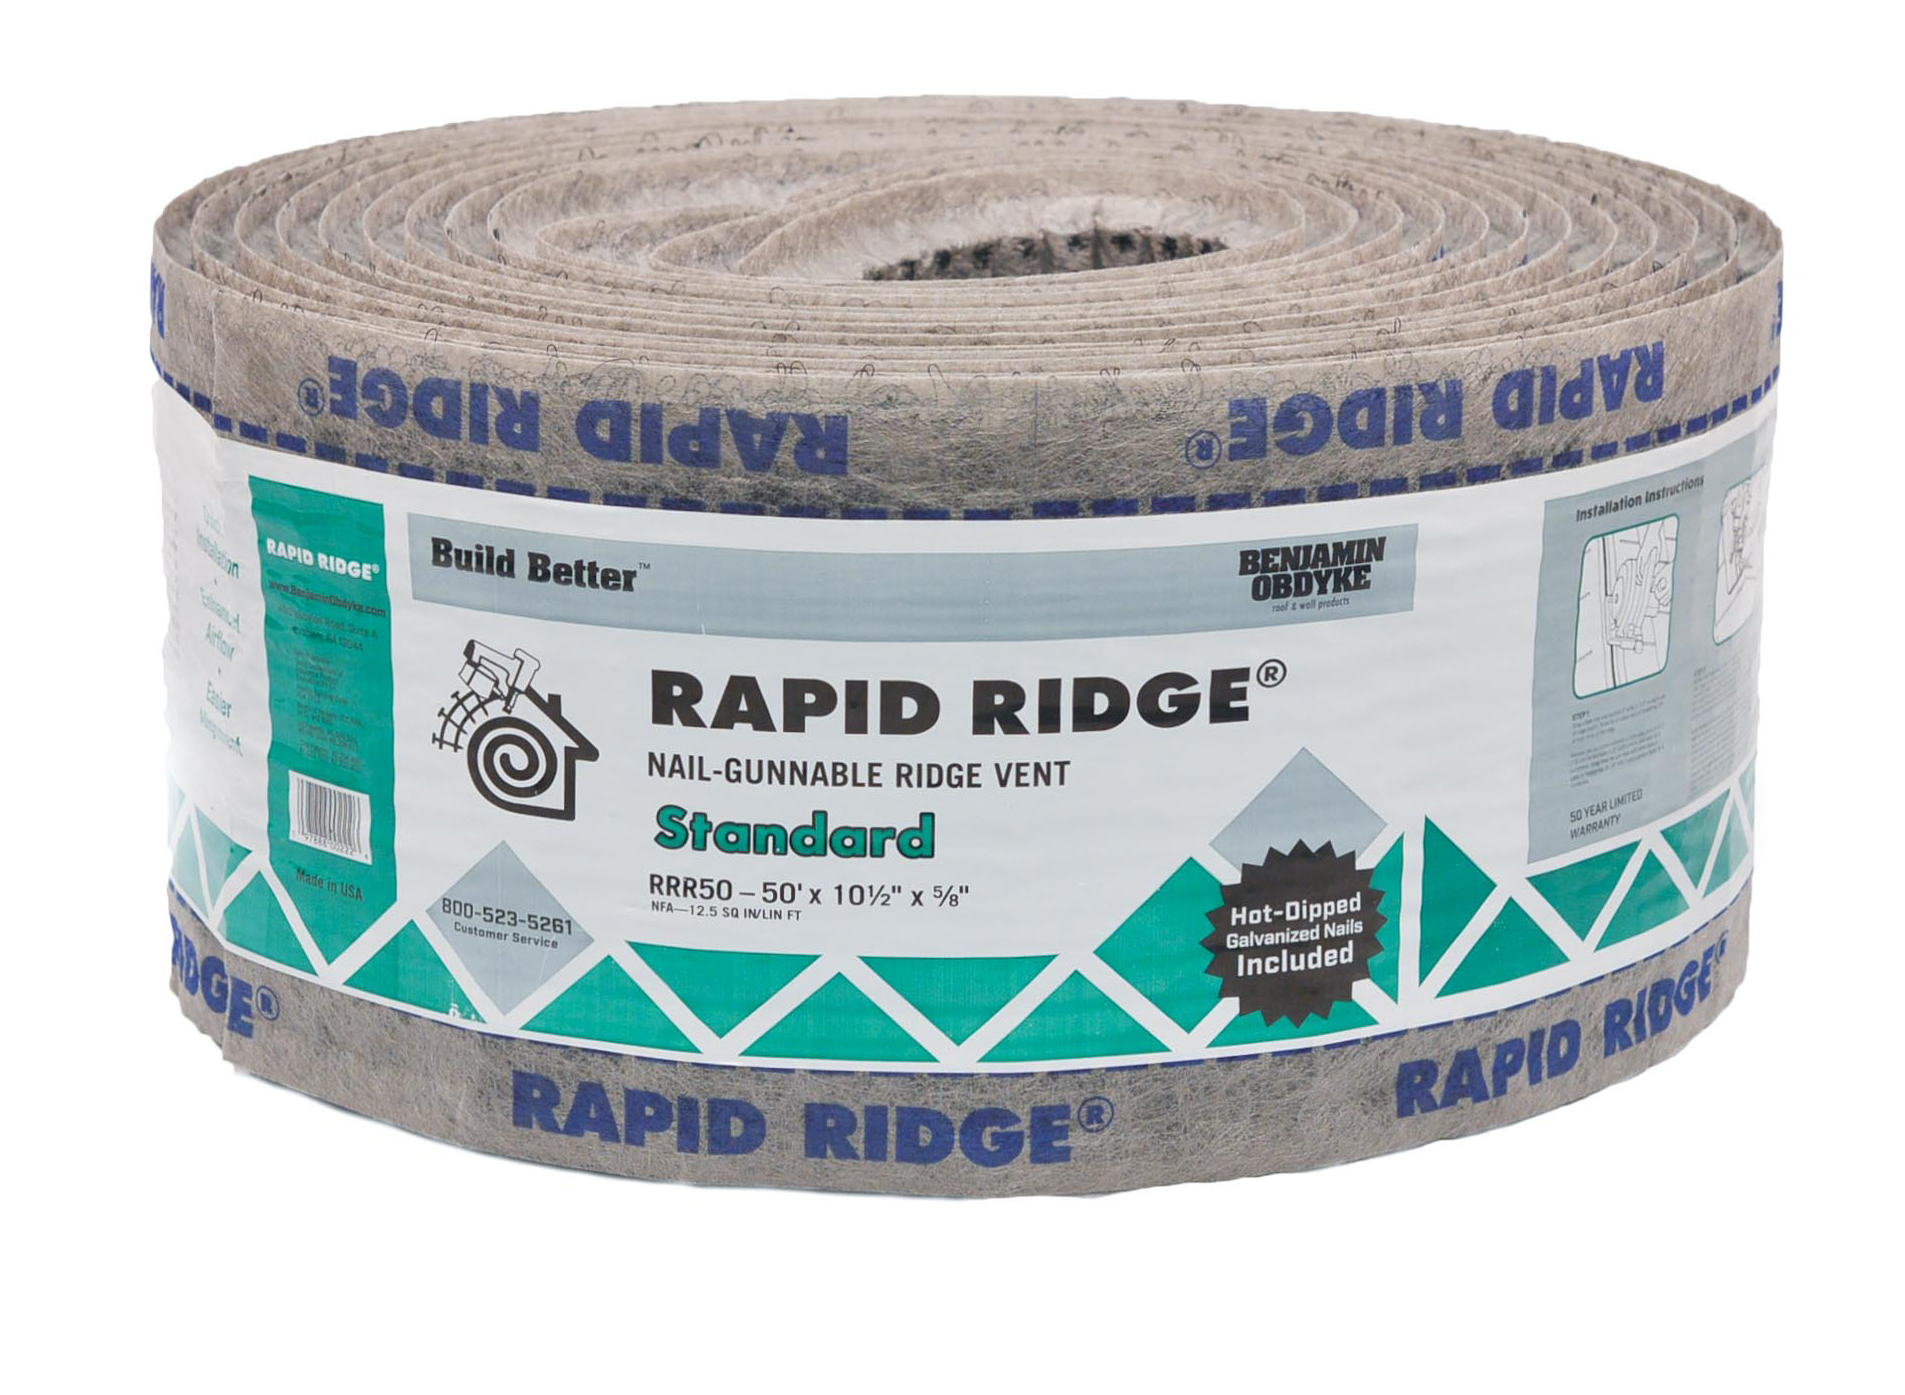 rapid ridge 50 new packaging cropped